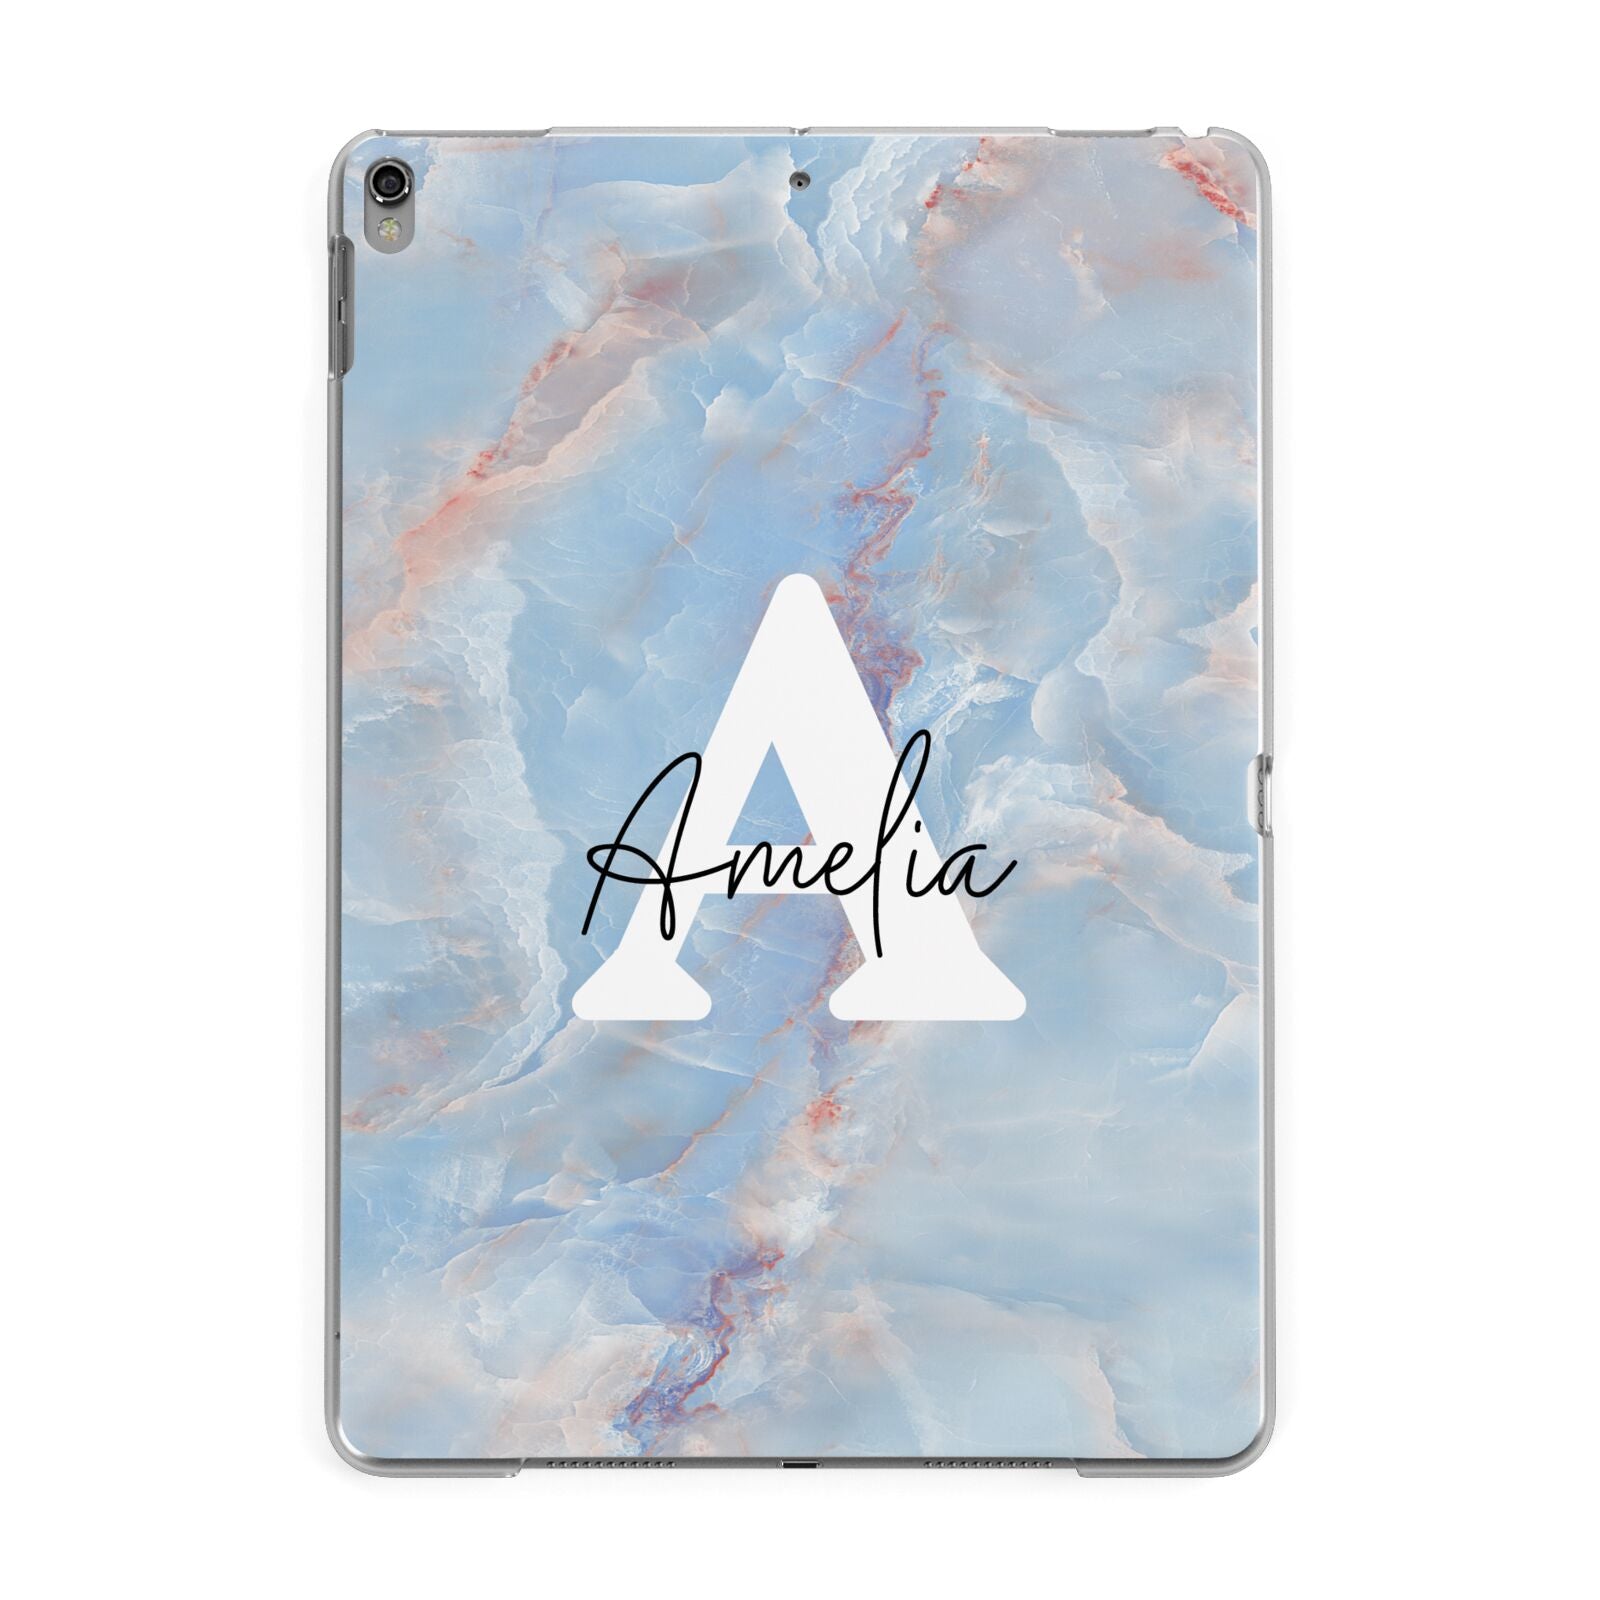 Blue Onyx Marble Apple iPad Grey Case